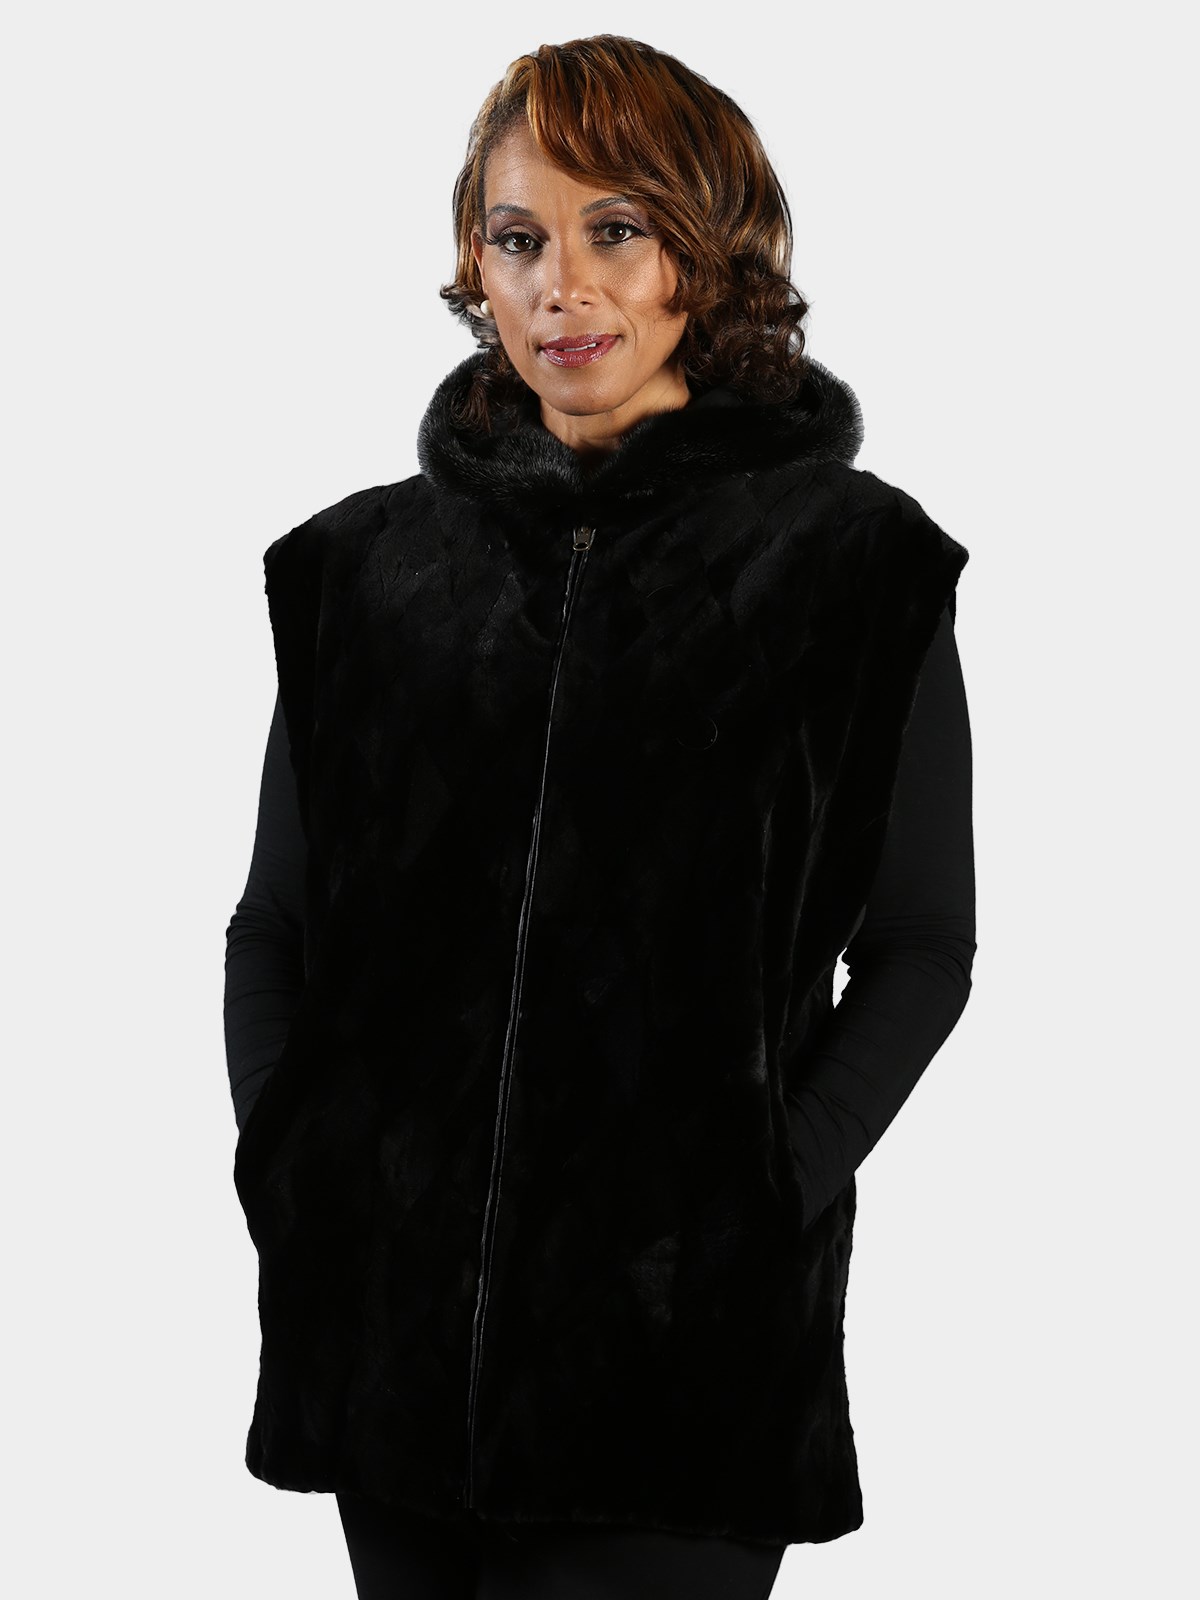 Woman's Plus Size Black Sheared Mink Fur Vest with Fox Trimmed Hood Reversible to Rain Taffeta